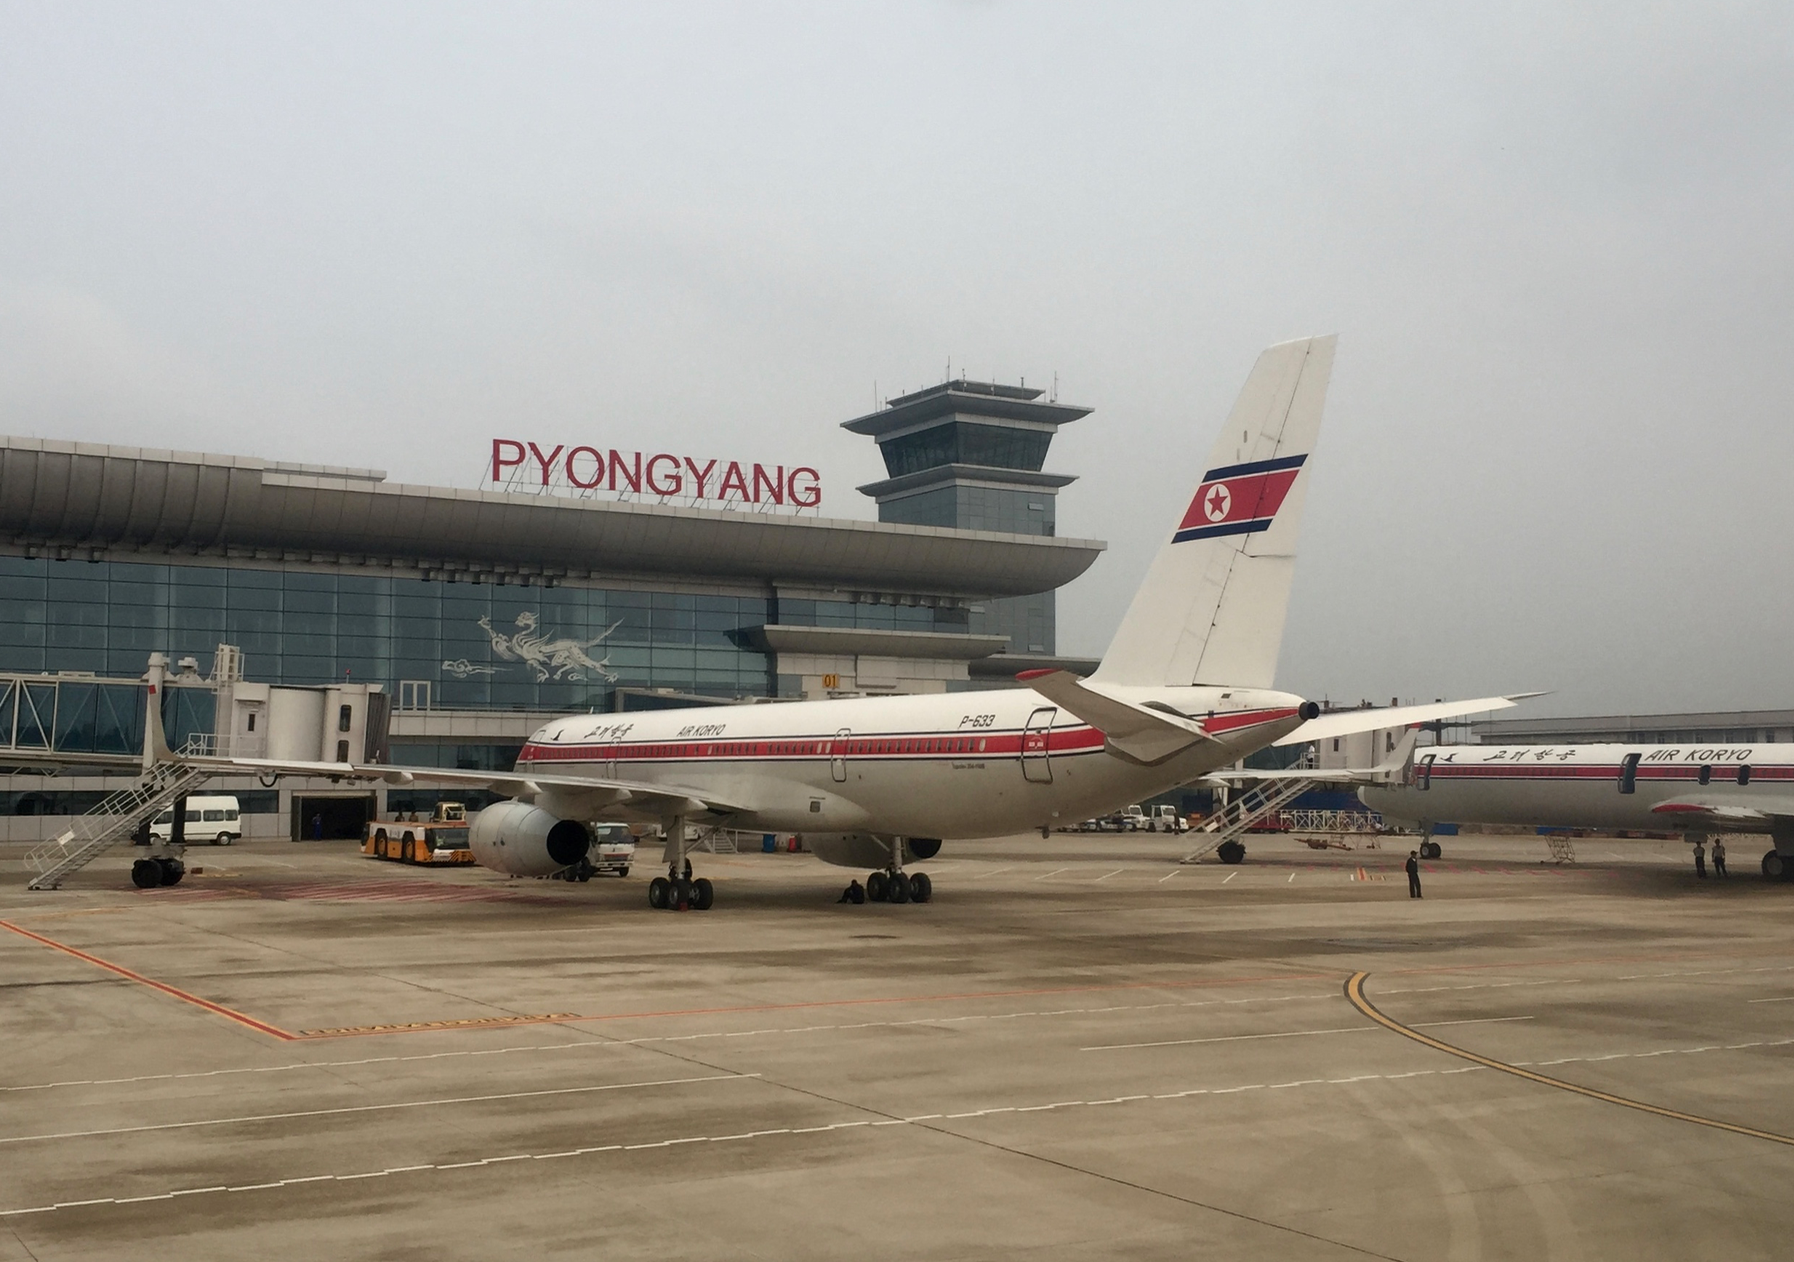 مطار بيونغ يانغ